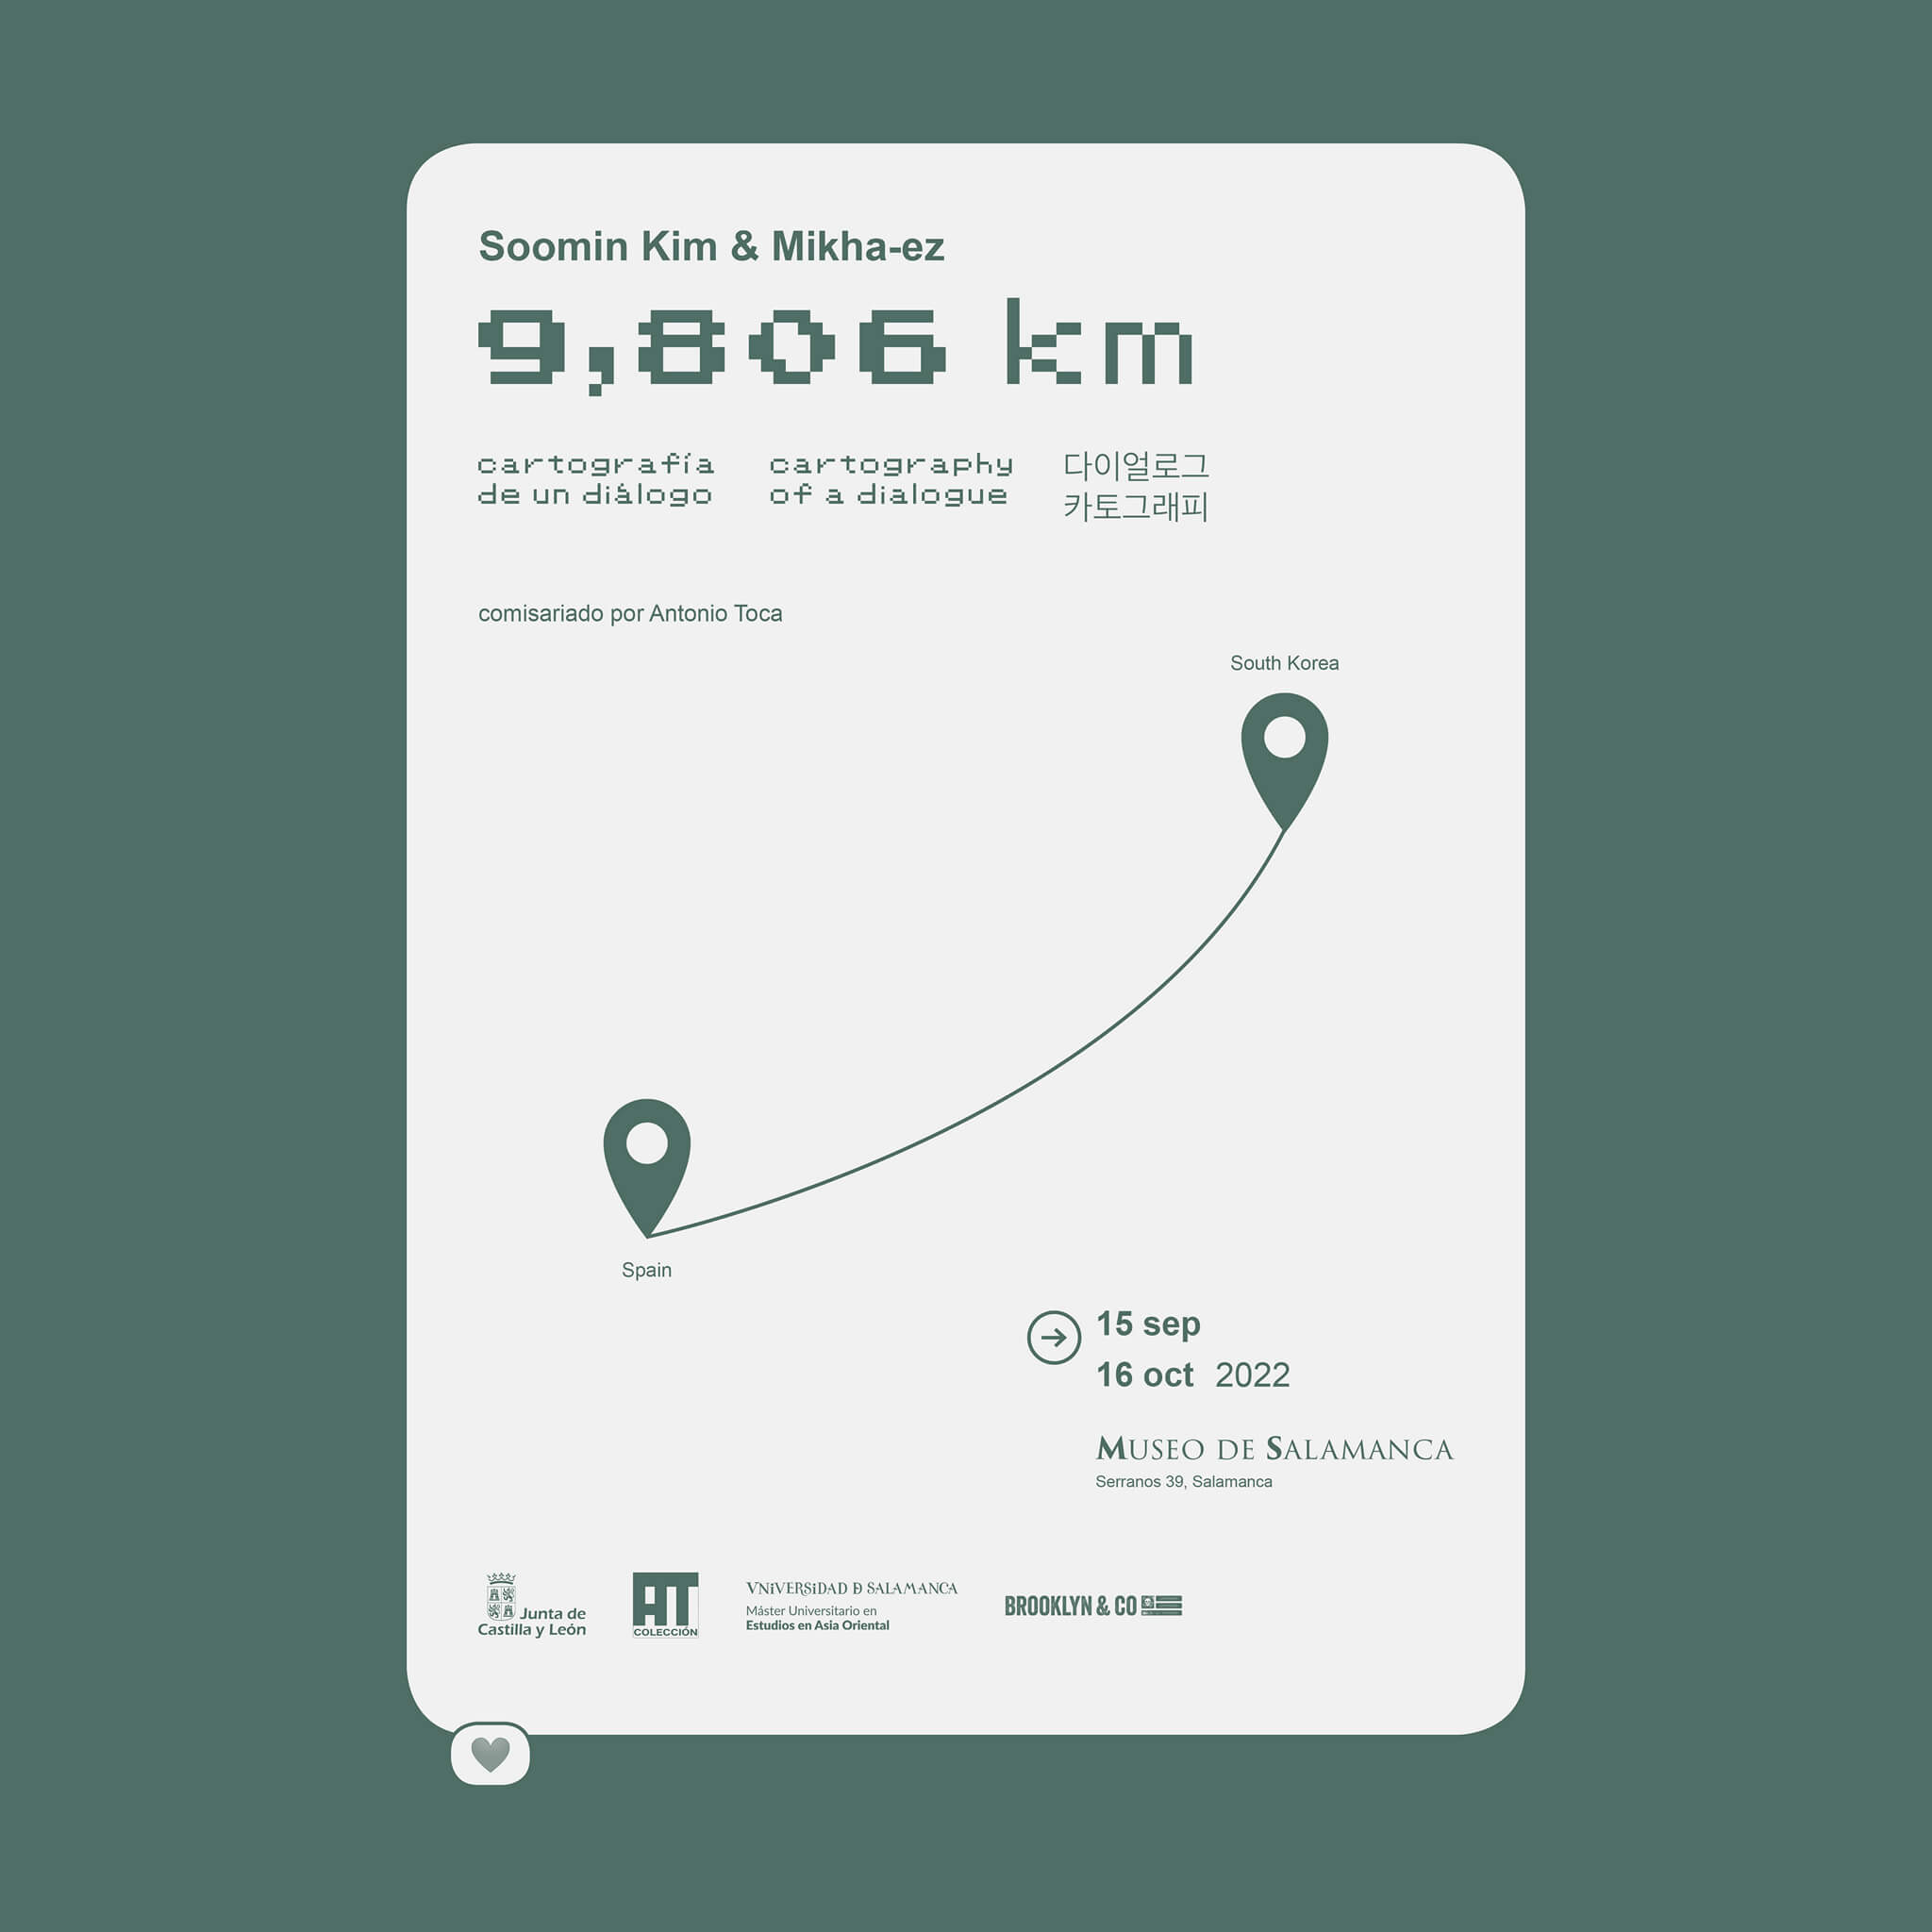 Museo de Salamanca | Soomin Kim & Mikha-ez. 9,806 km. Cartografía de un diálogo. | 15 de septiembre de 2022